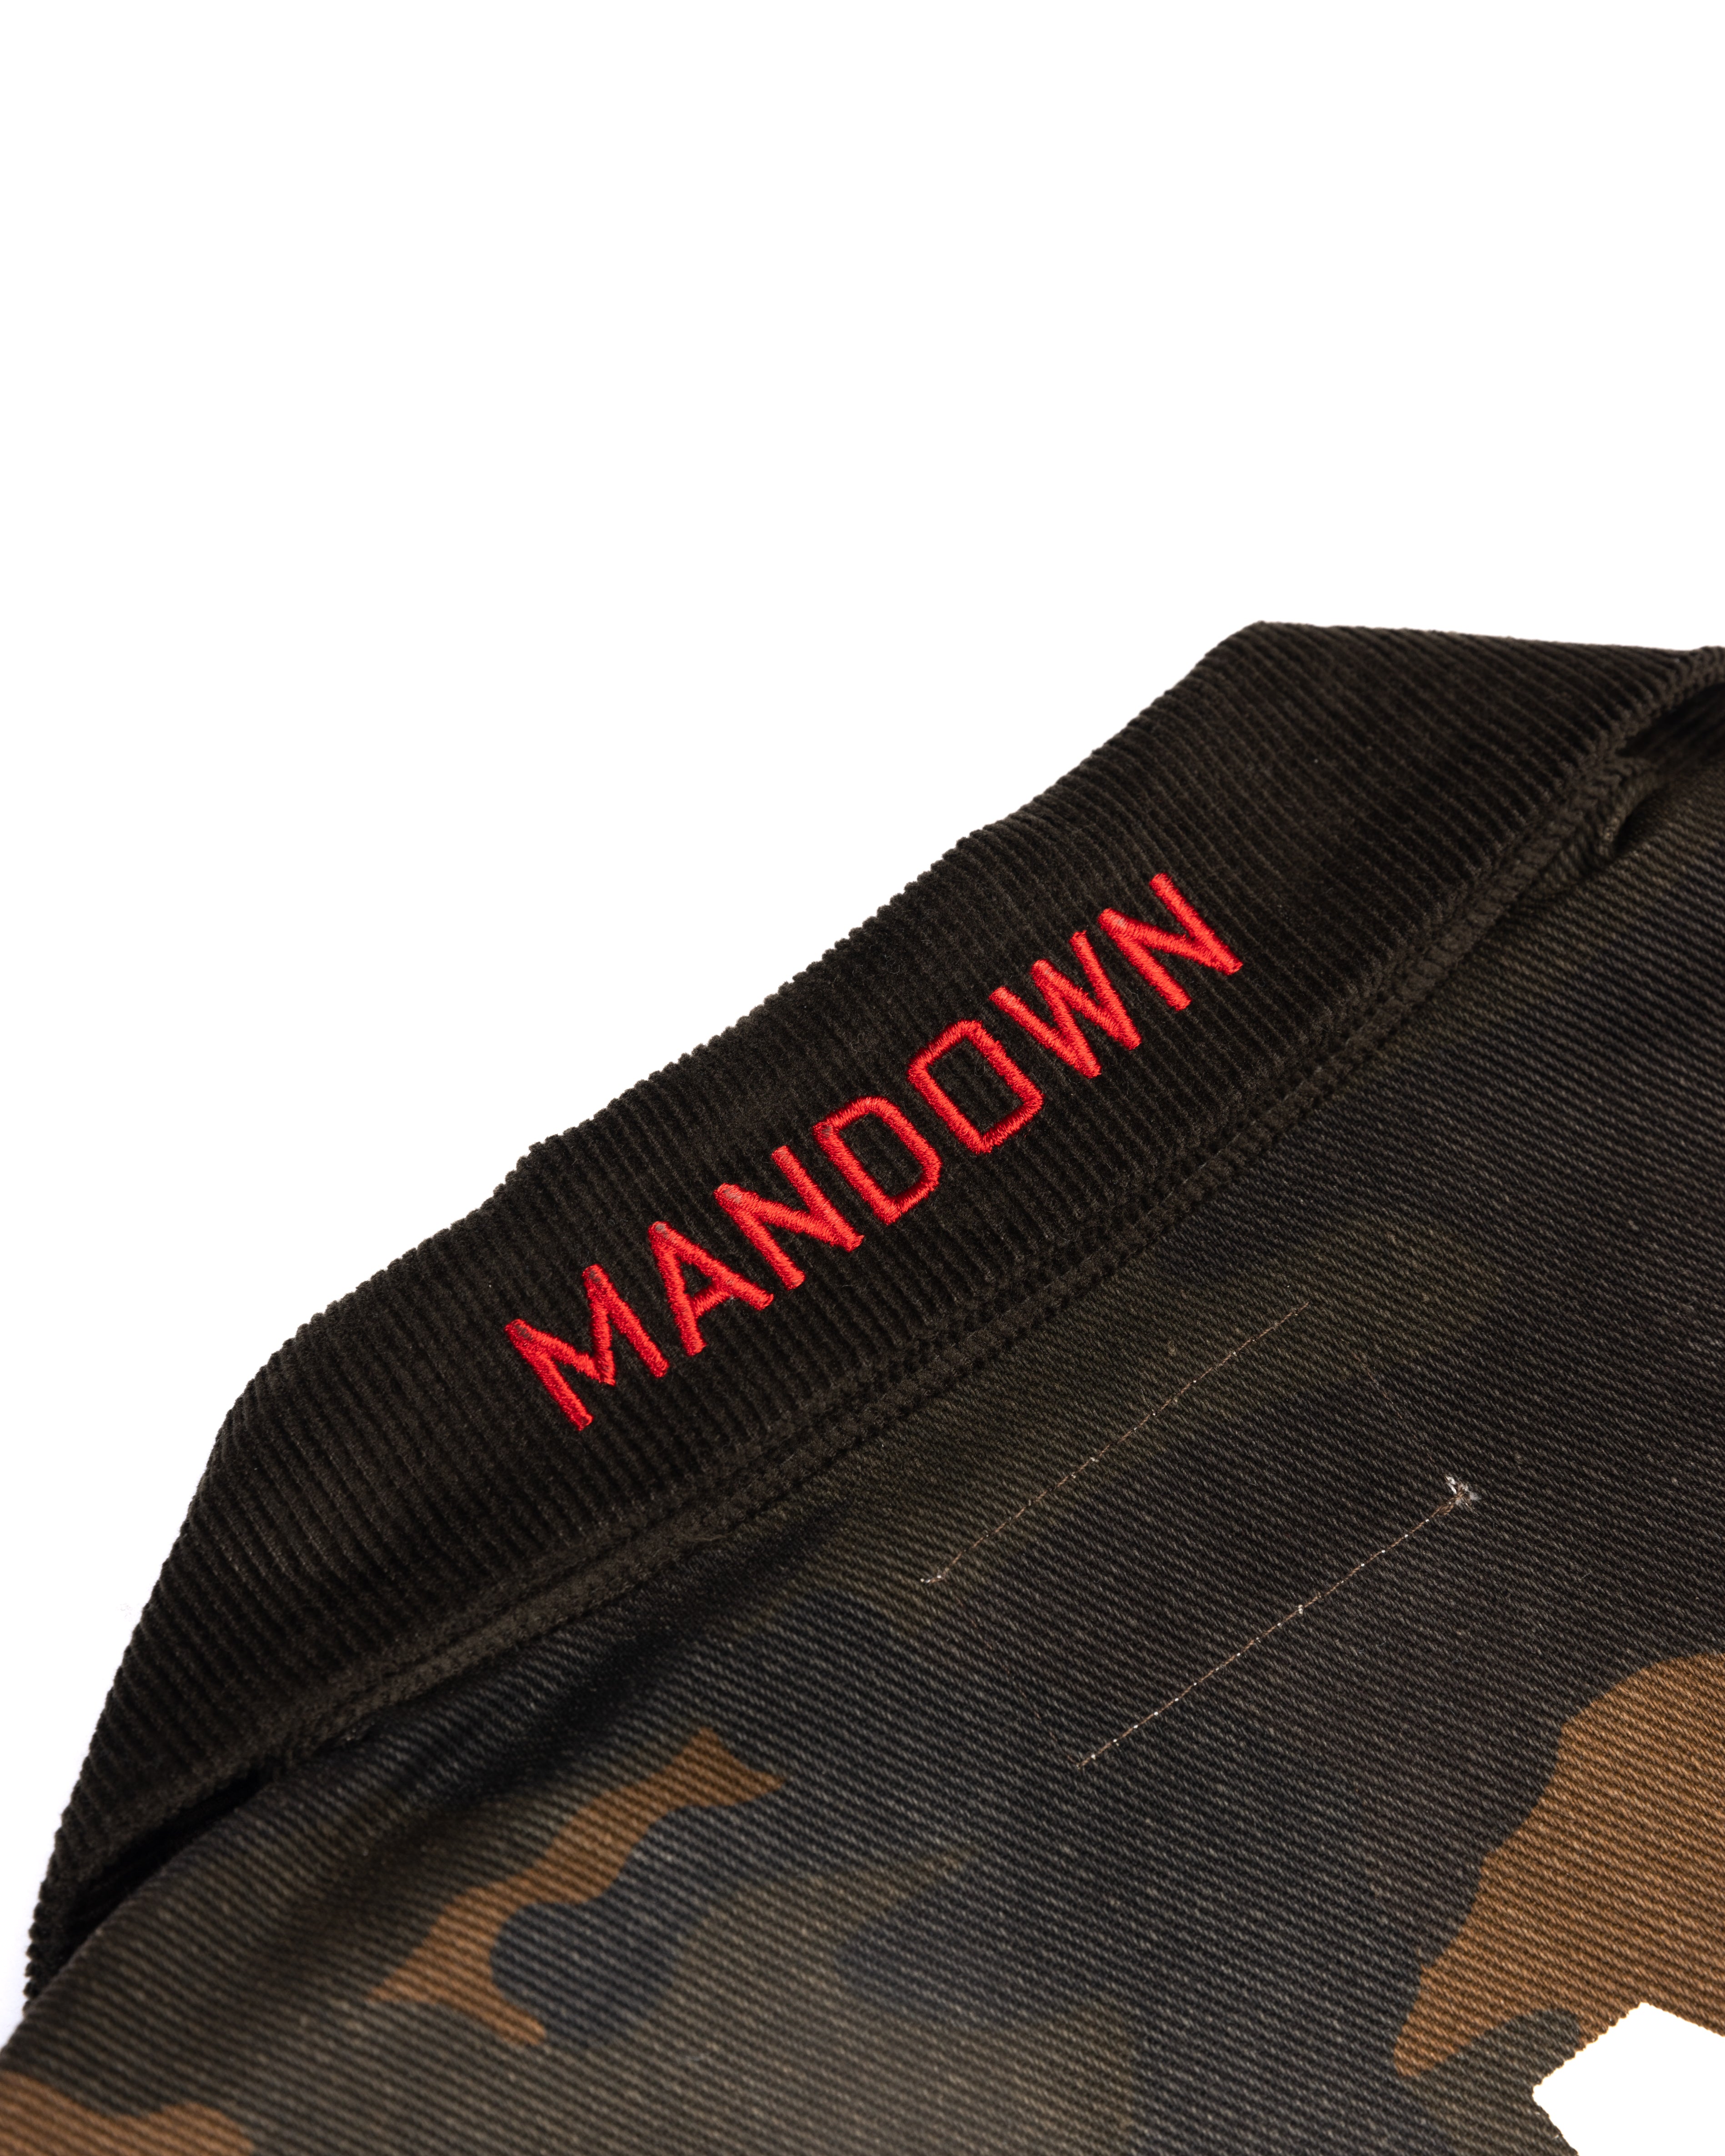 MANDOWN 